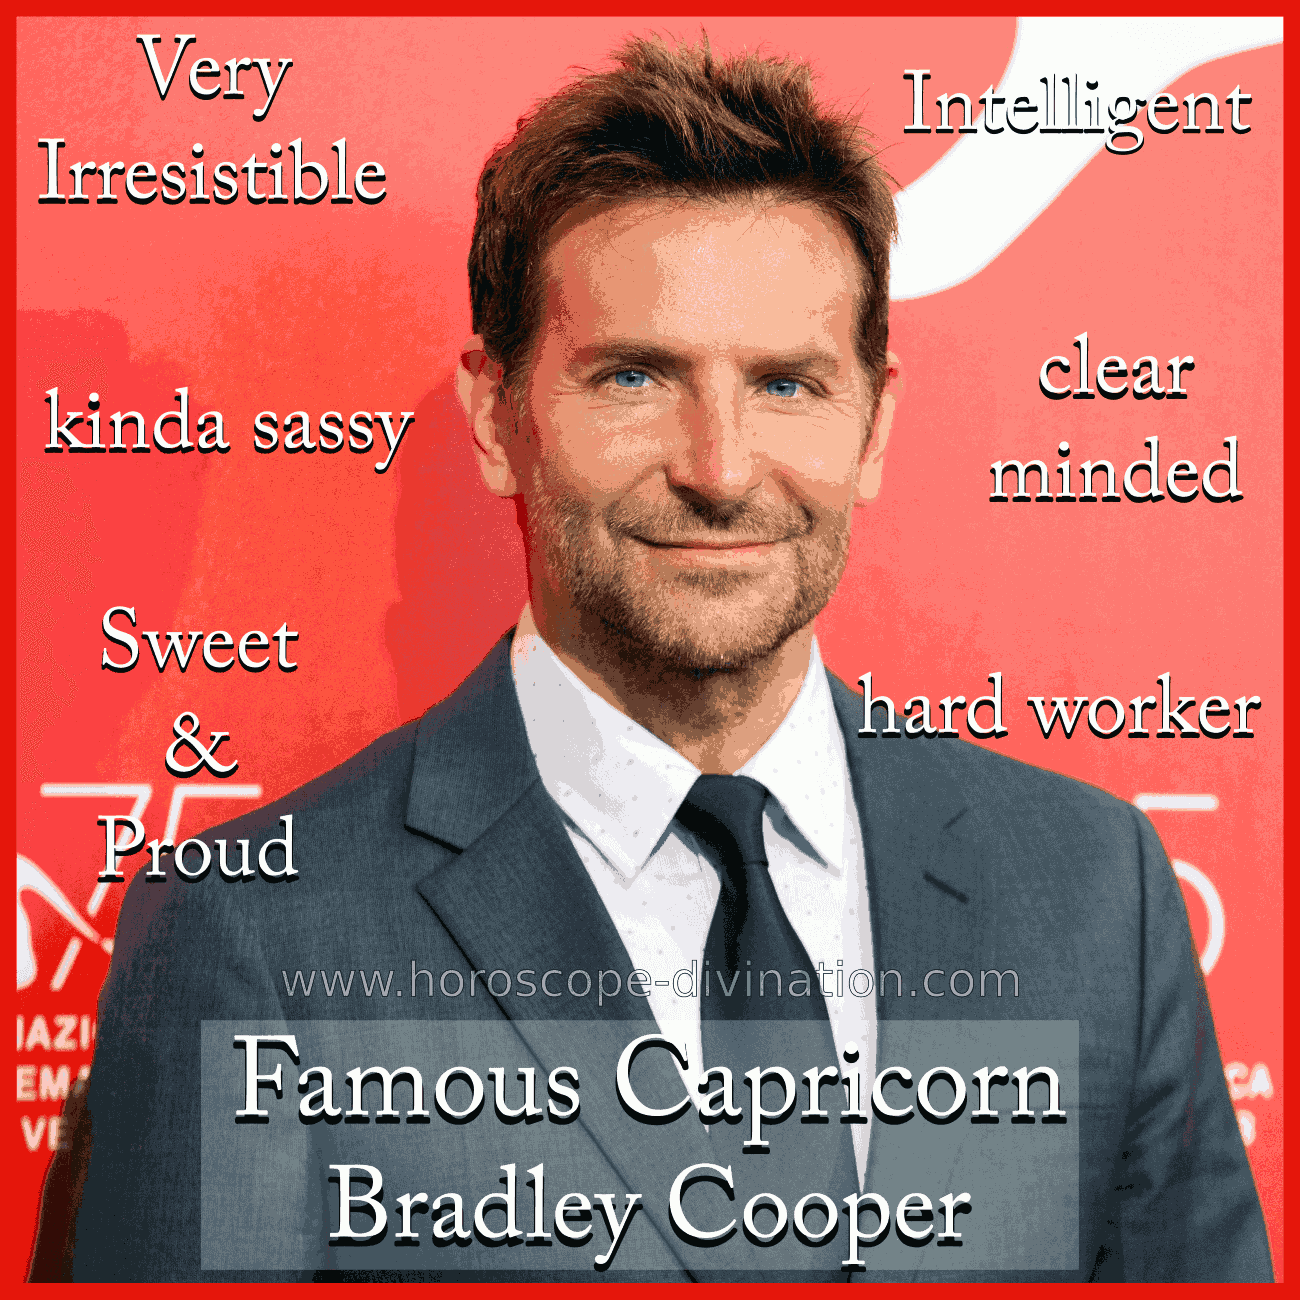 actor Bradley Cooper - Capricorn zodiac sign